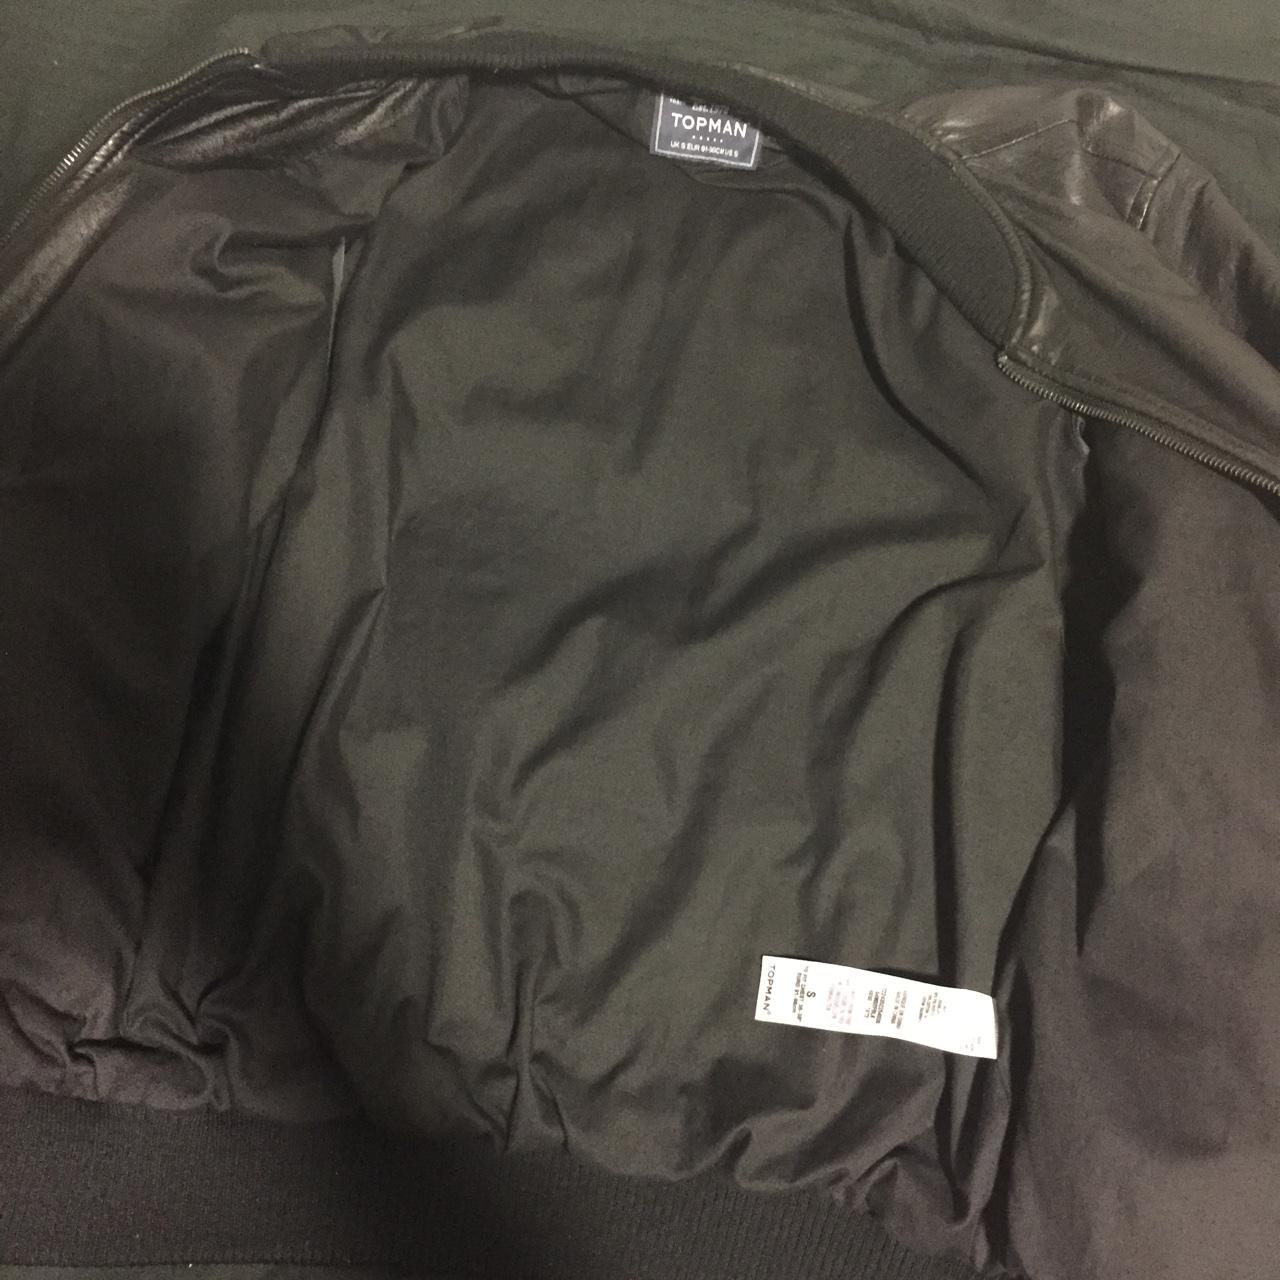 Topman Black Leather Jacket, great condition. Size S... - Depop